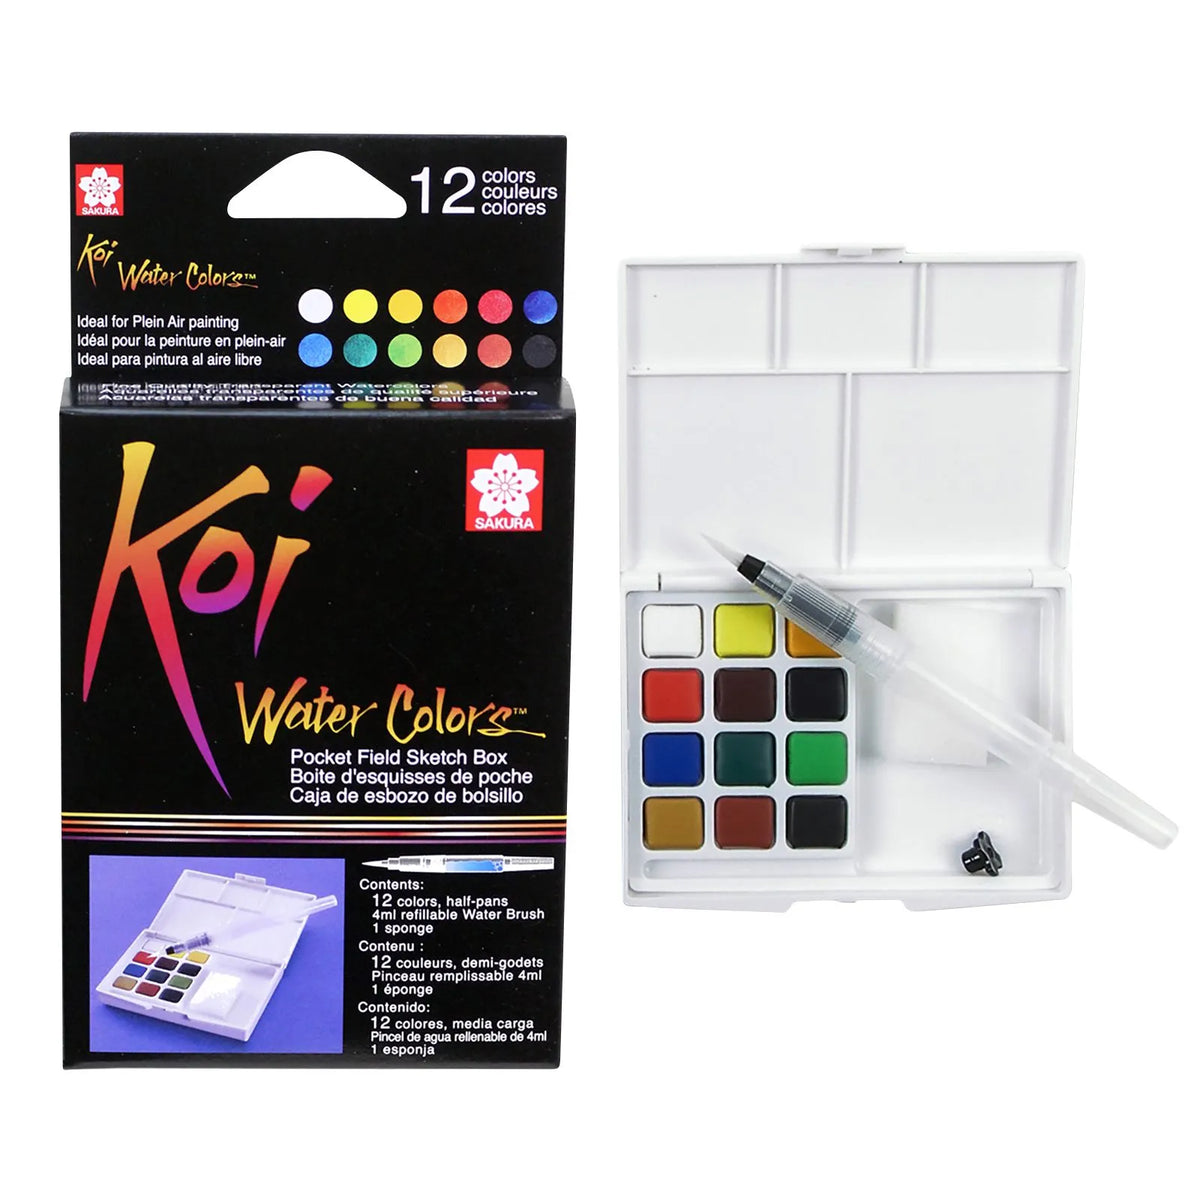 WATERCOLOUR - Koi water colors Pocket Field Sketch Box - 12 colors